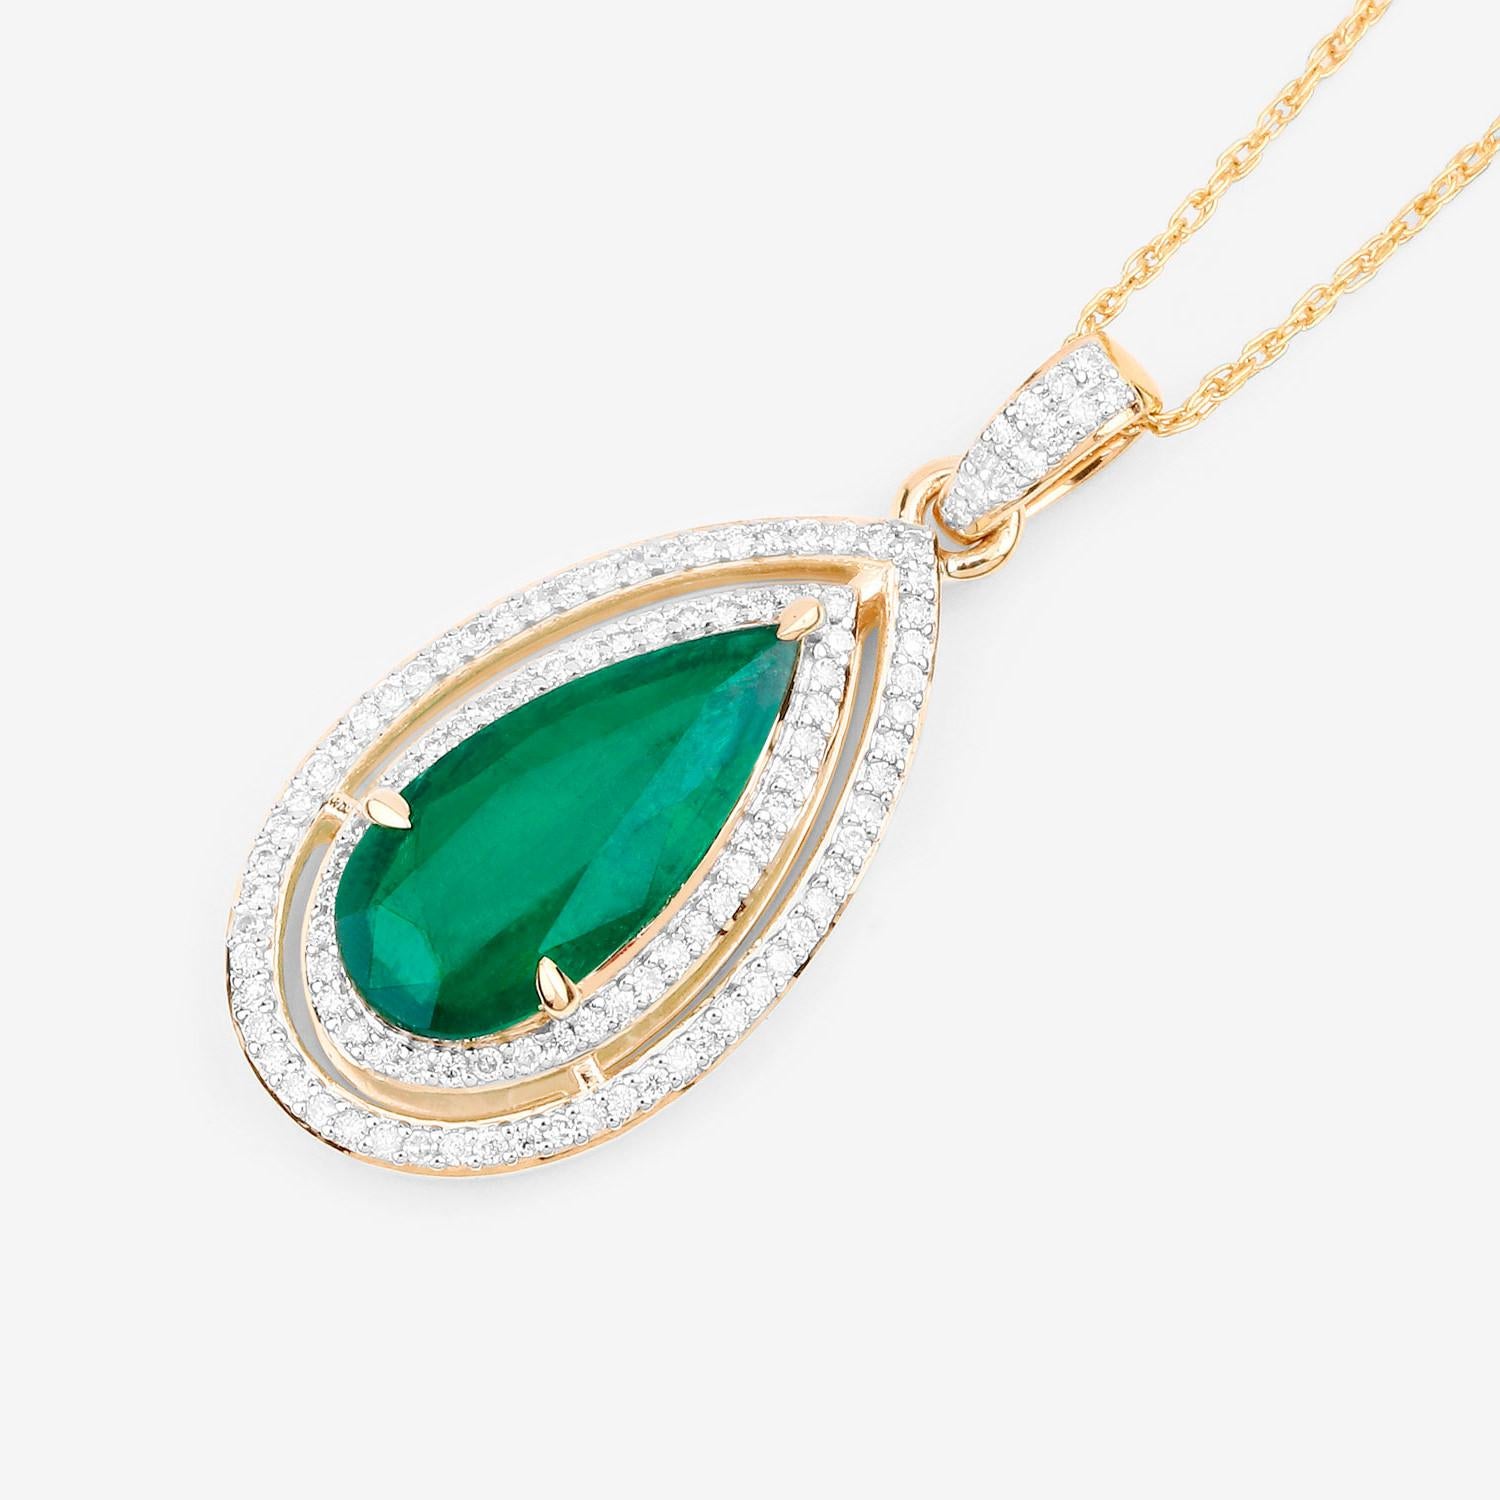 Pear Cut IGI Certified Zambian Emerald Pendant Necklace 2.17 Carats 14K Yellow Gold